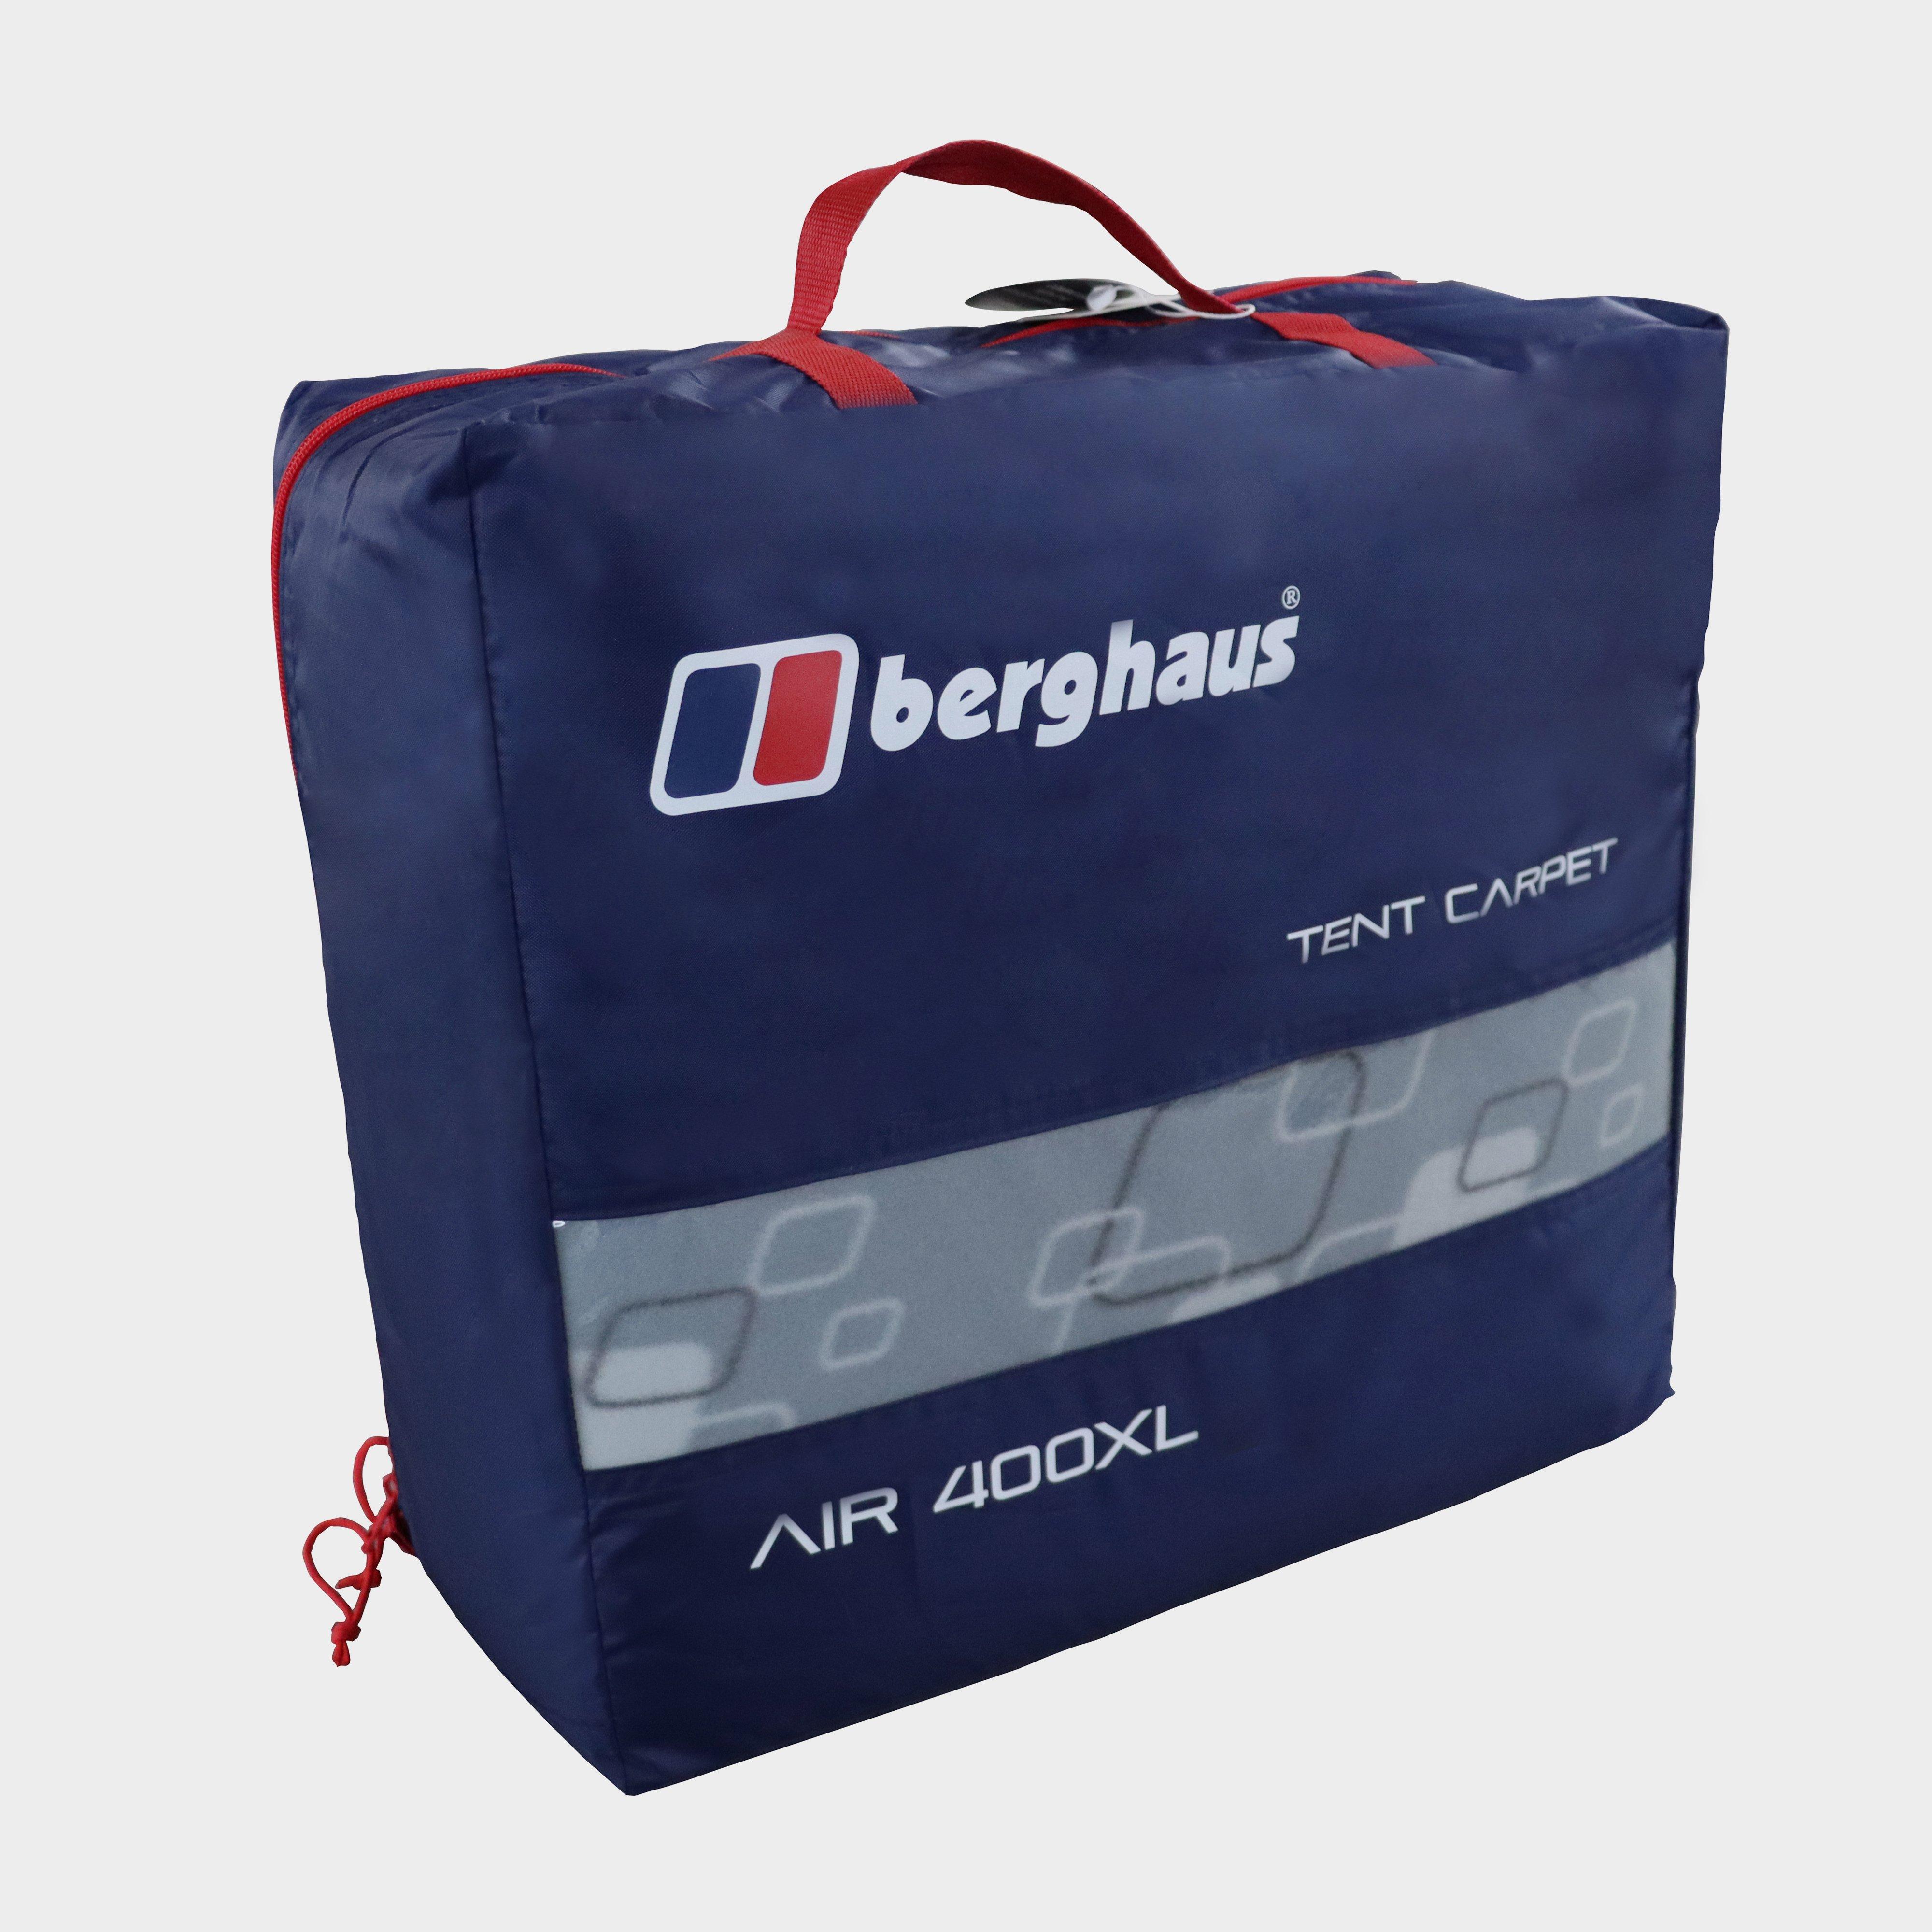  Berghaus Air 400XL/4.1XL/4XL Tent Carpet, Grey